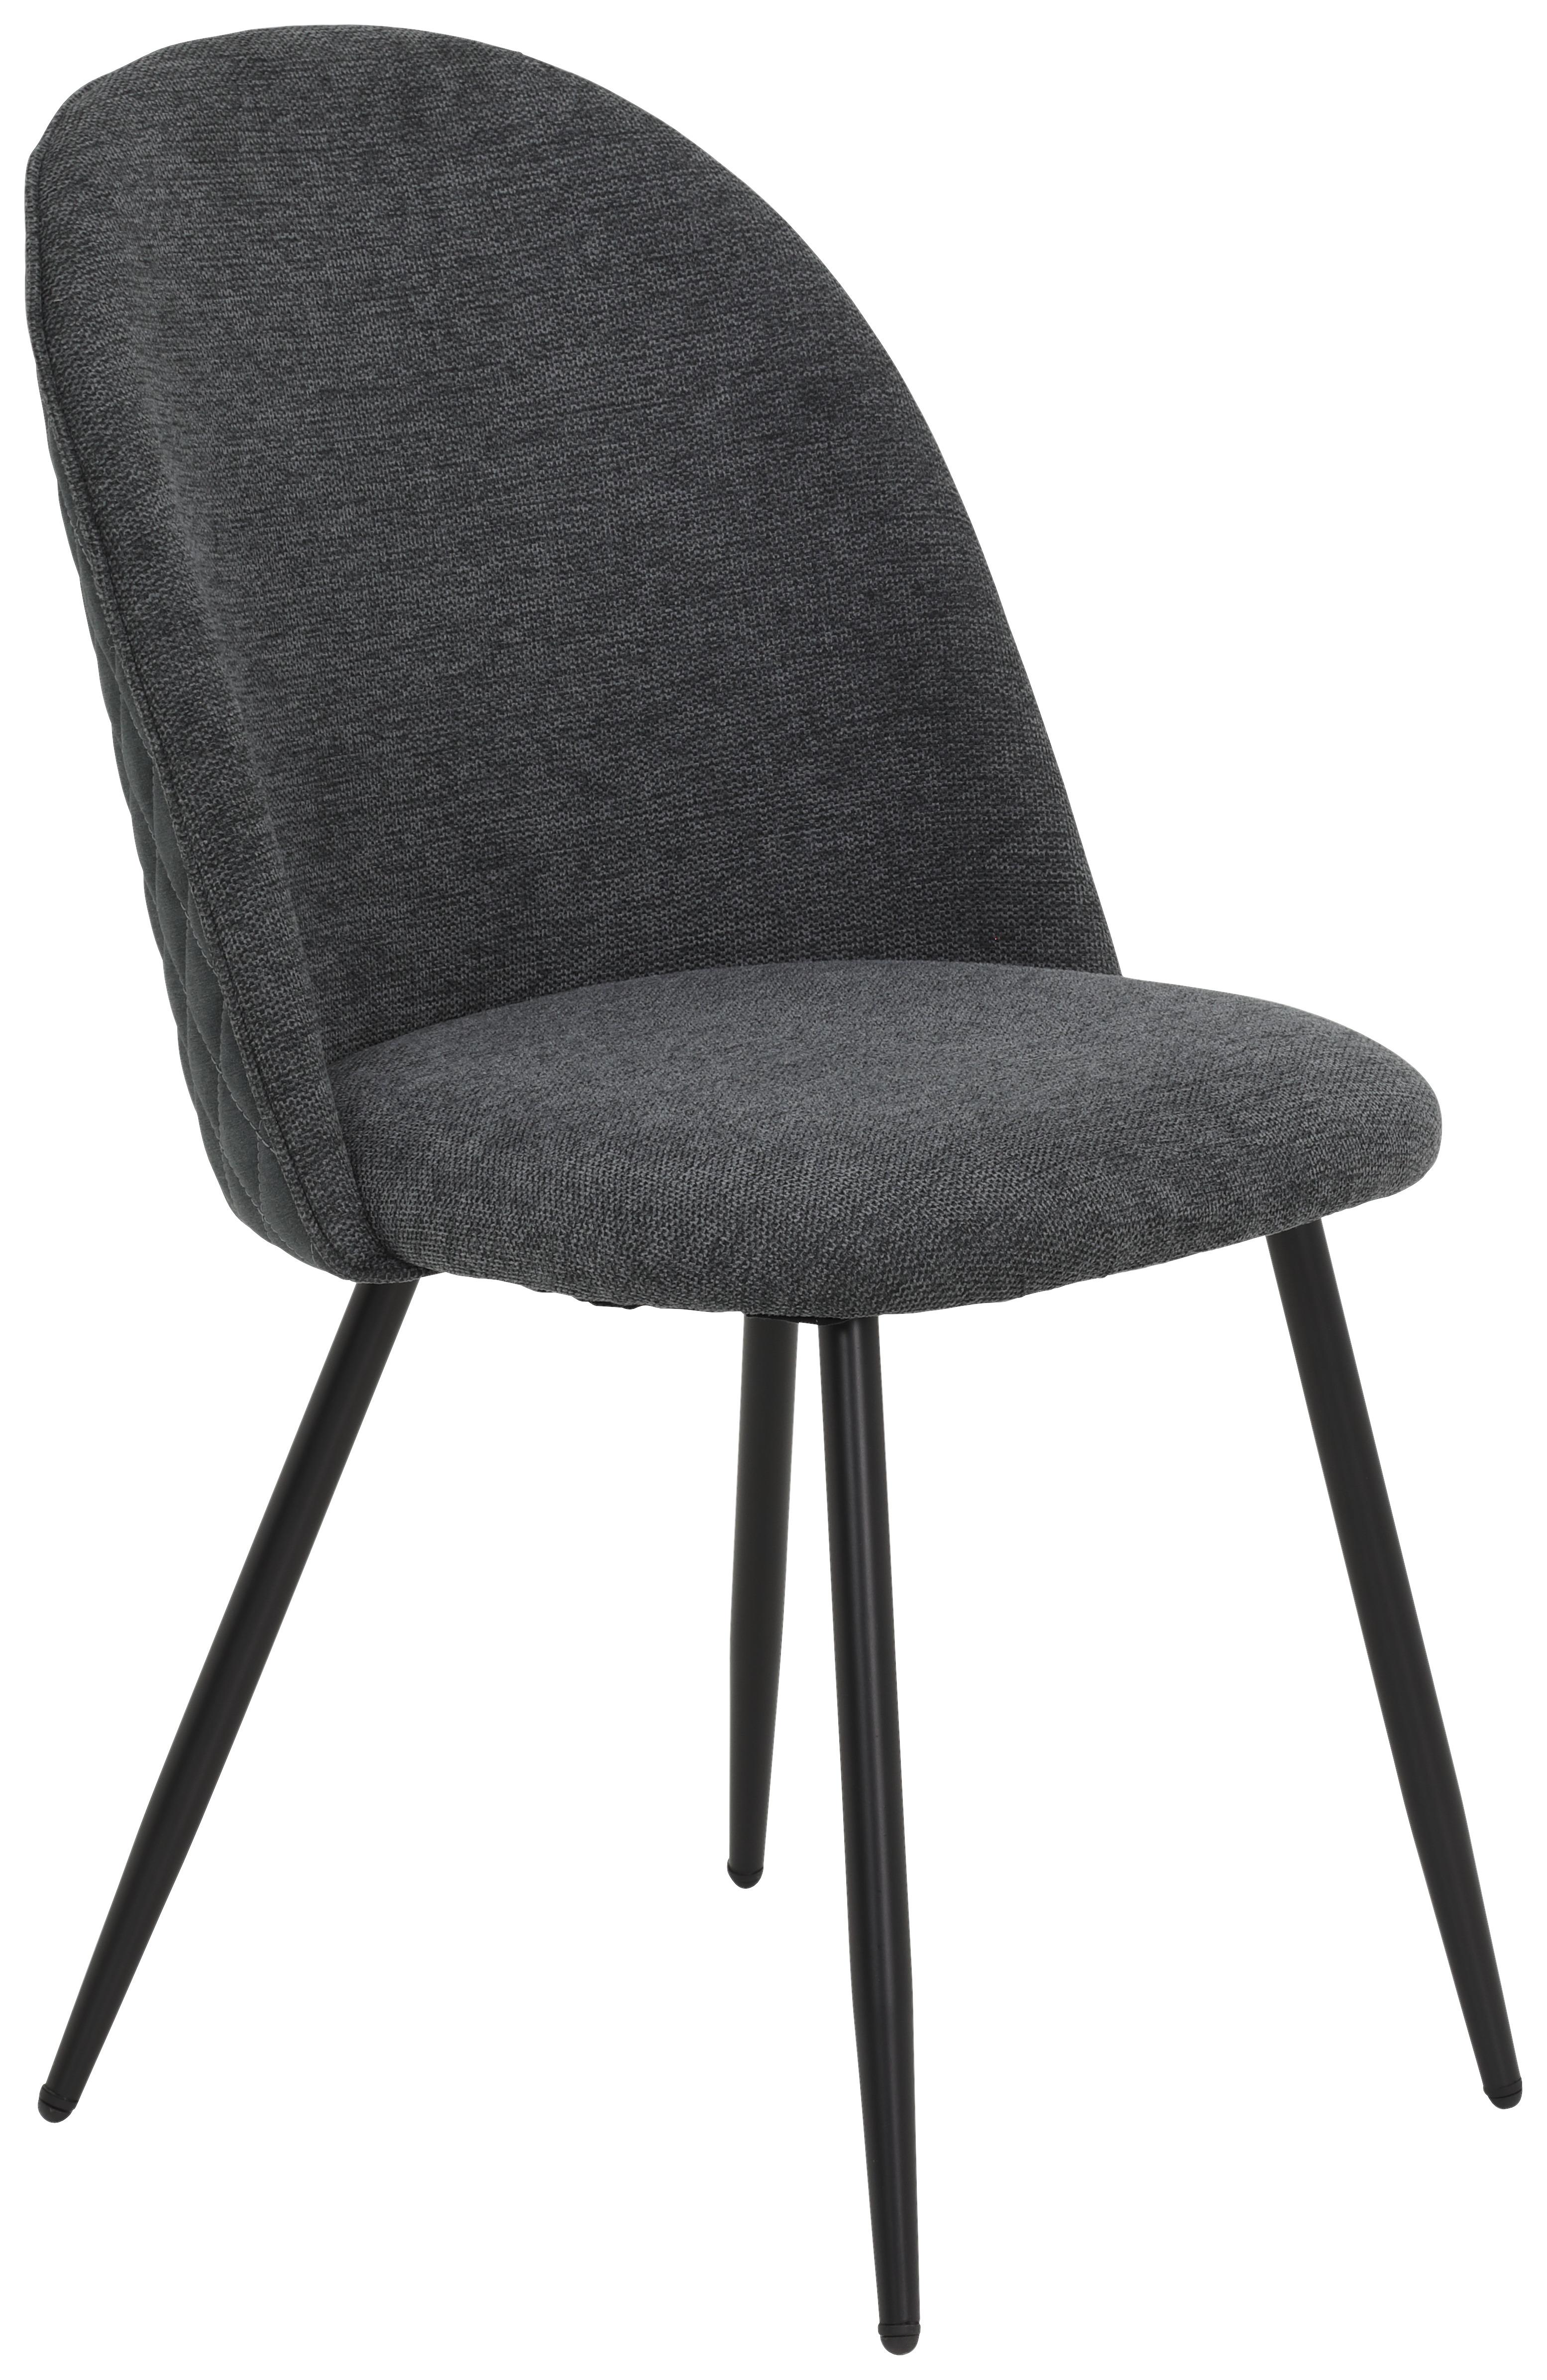 Stuhl in Grau - Schwarz/Grau, MODERN, Textil/Metall (46/84/56cm) - Modern Living